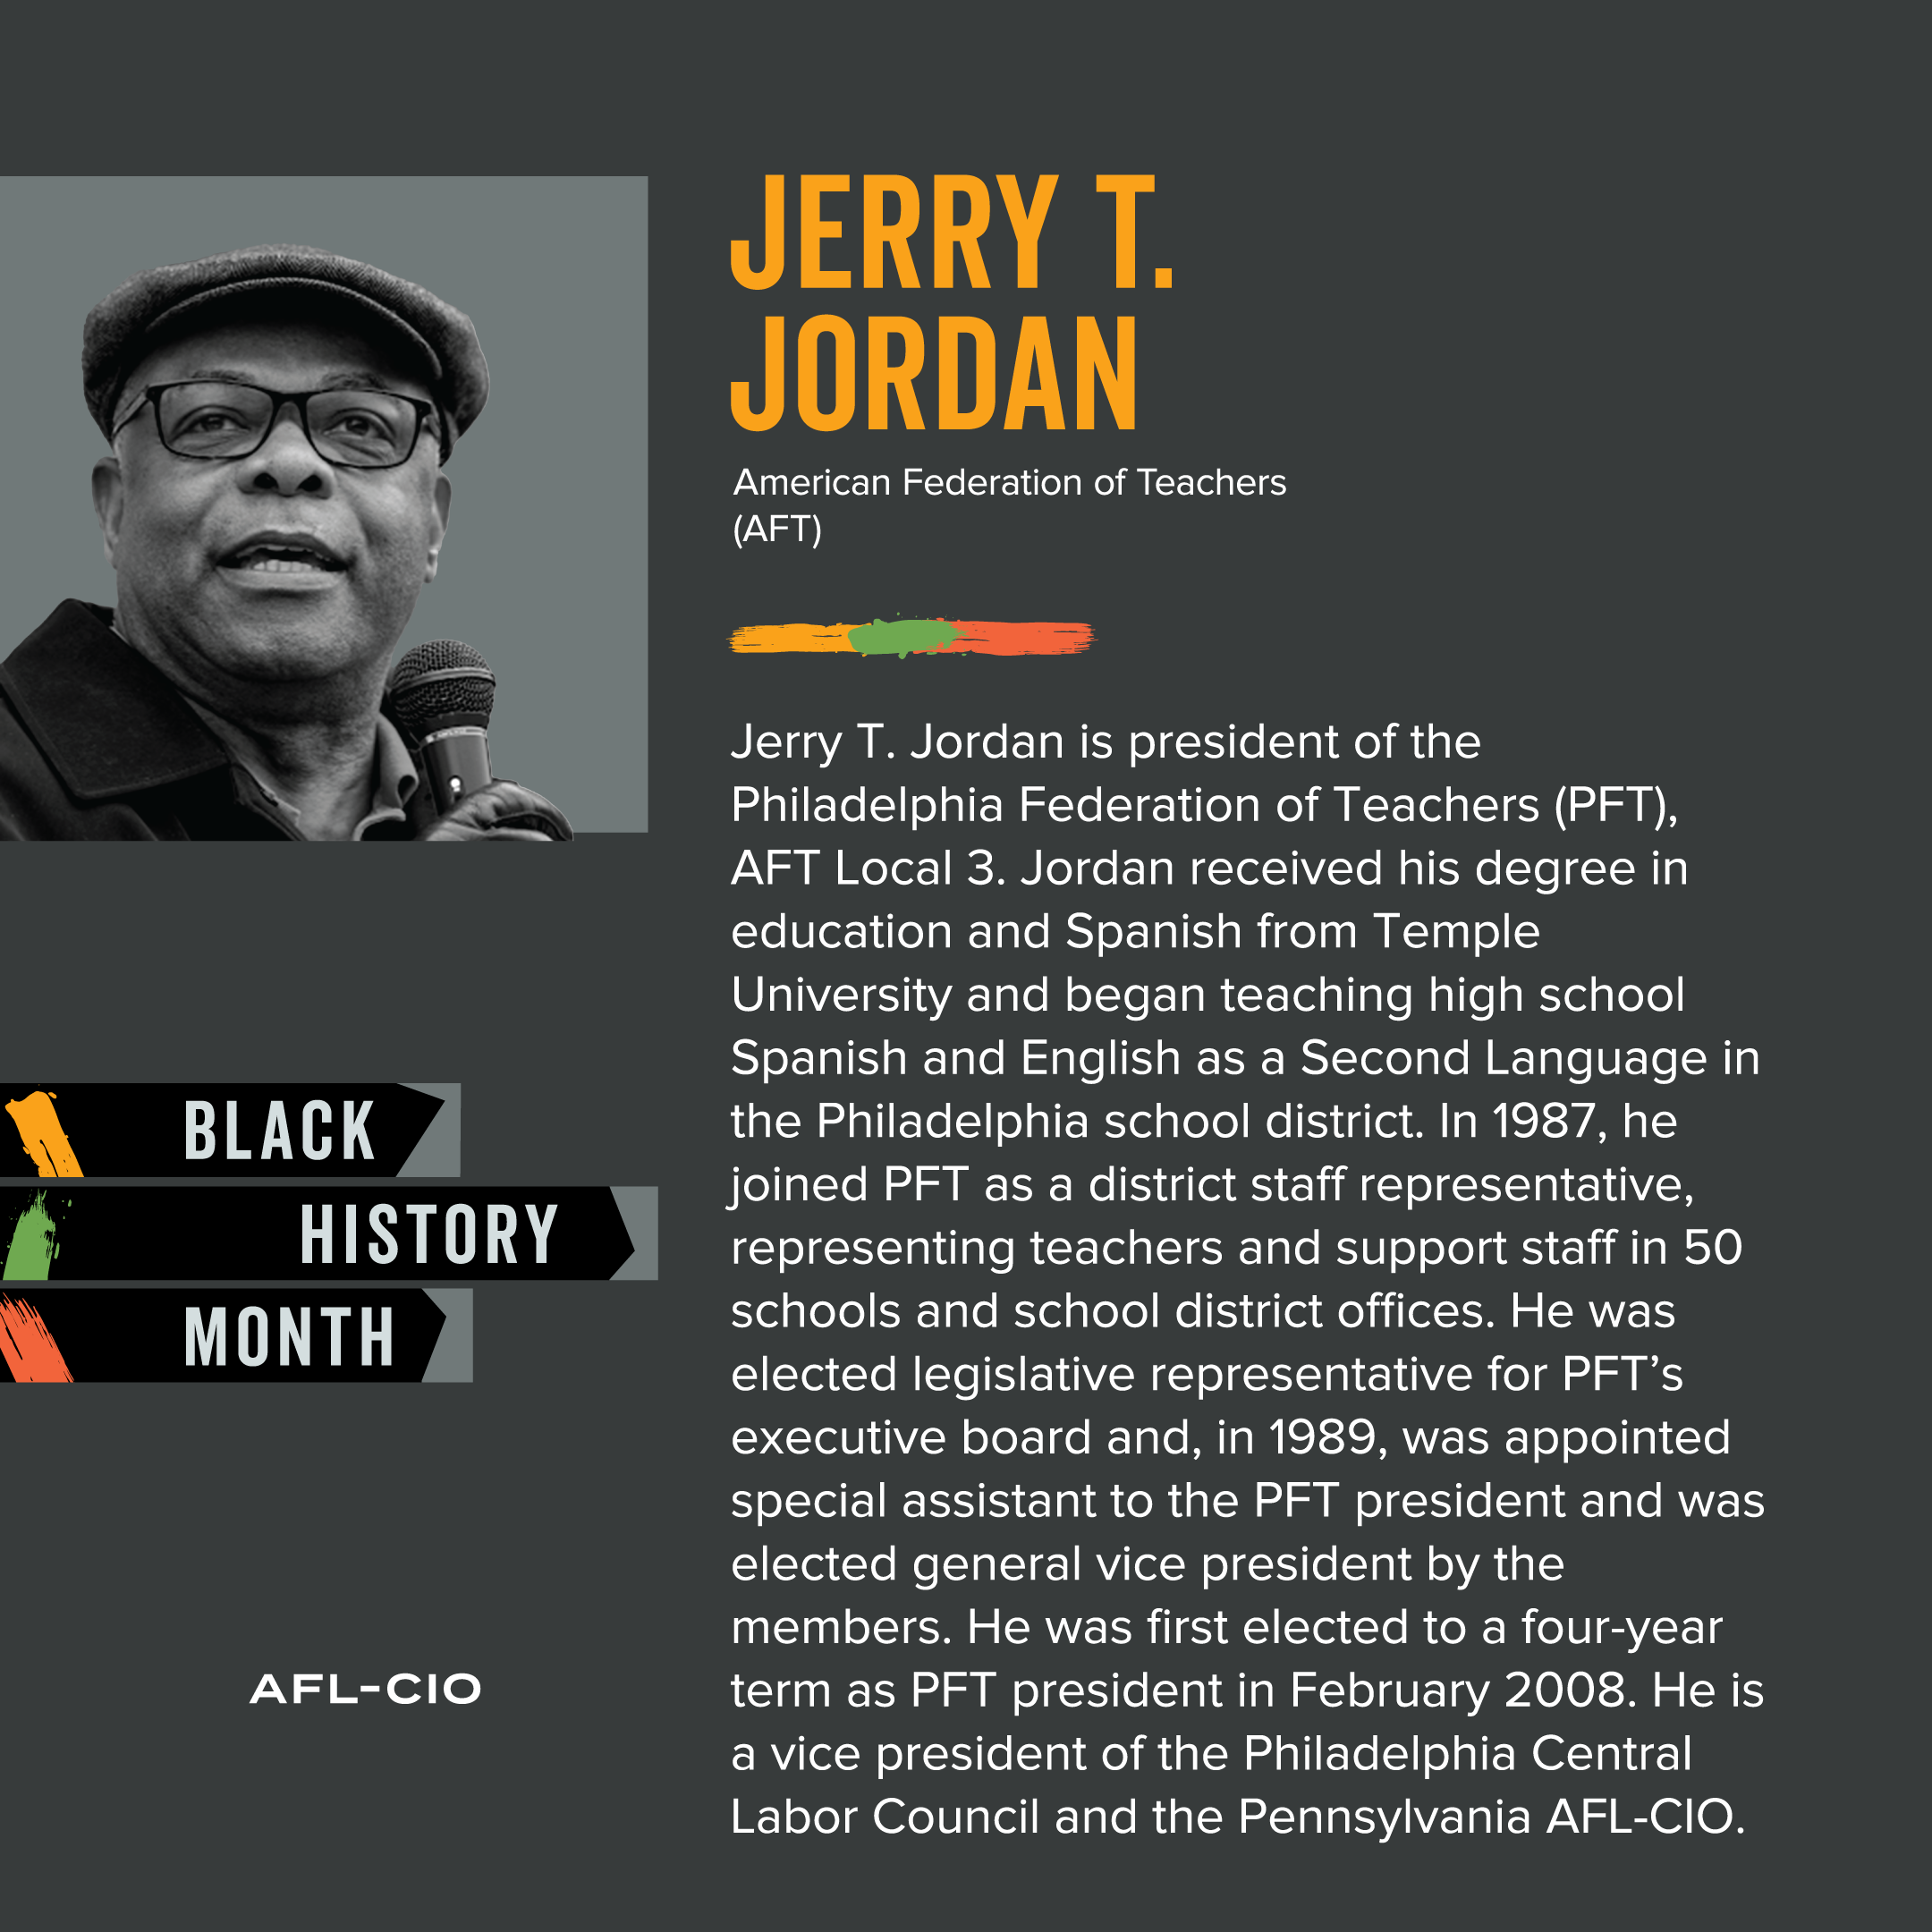 Jerry T. Jordan